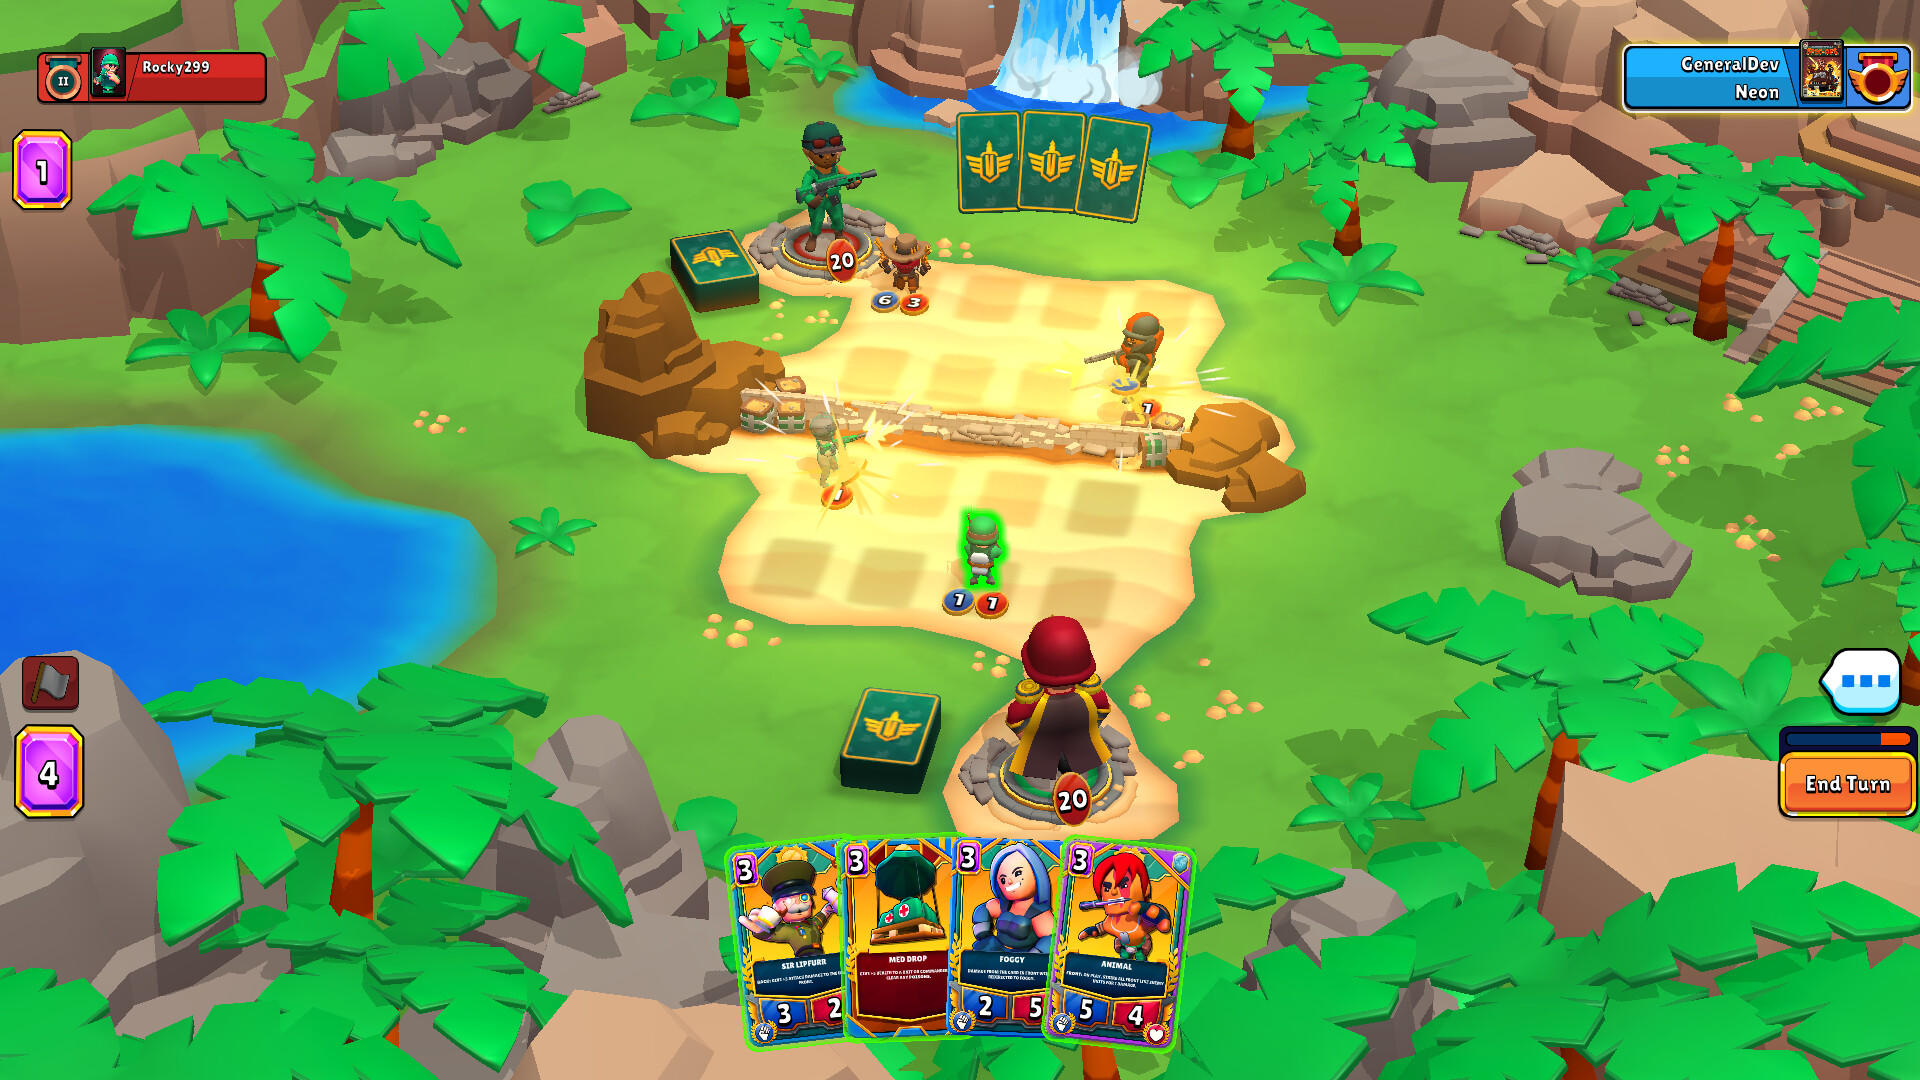 Screenshot 1 of Duelo de rivales: Batalla de cartas 